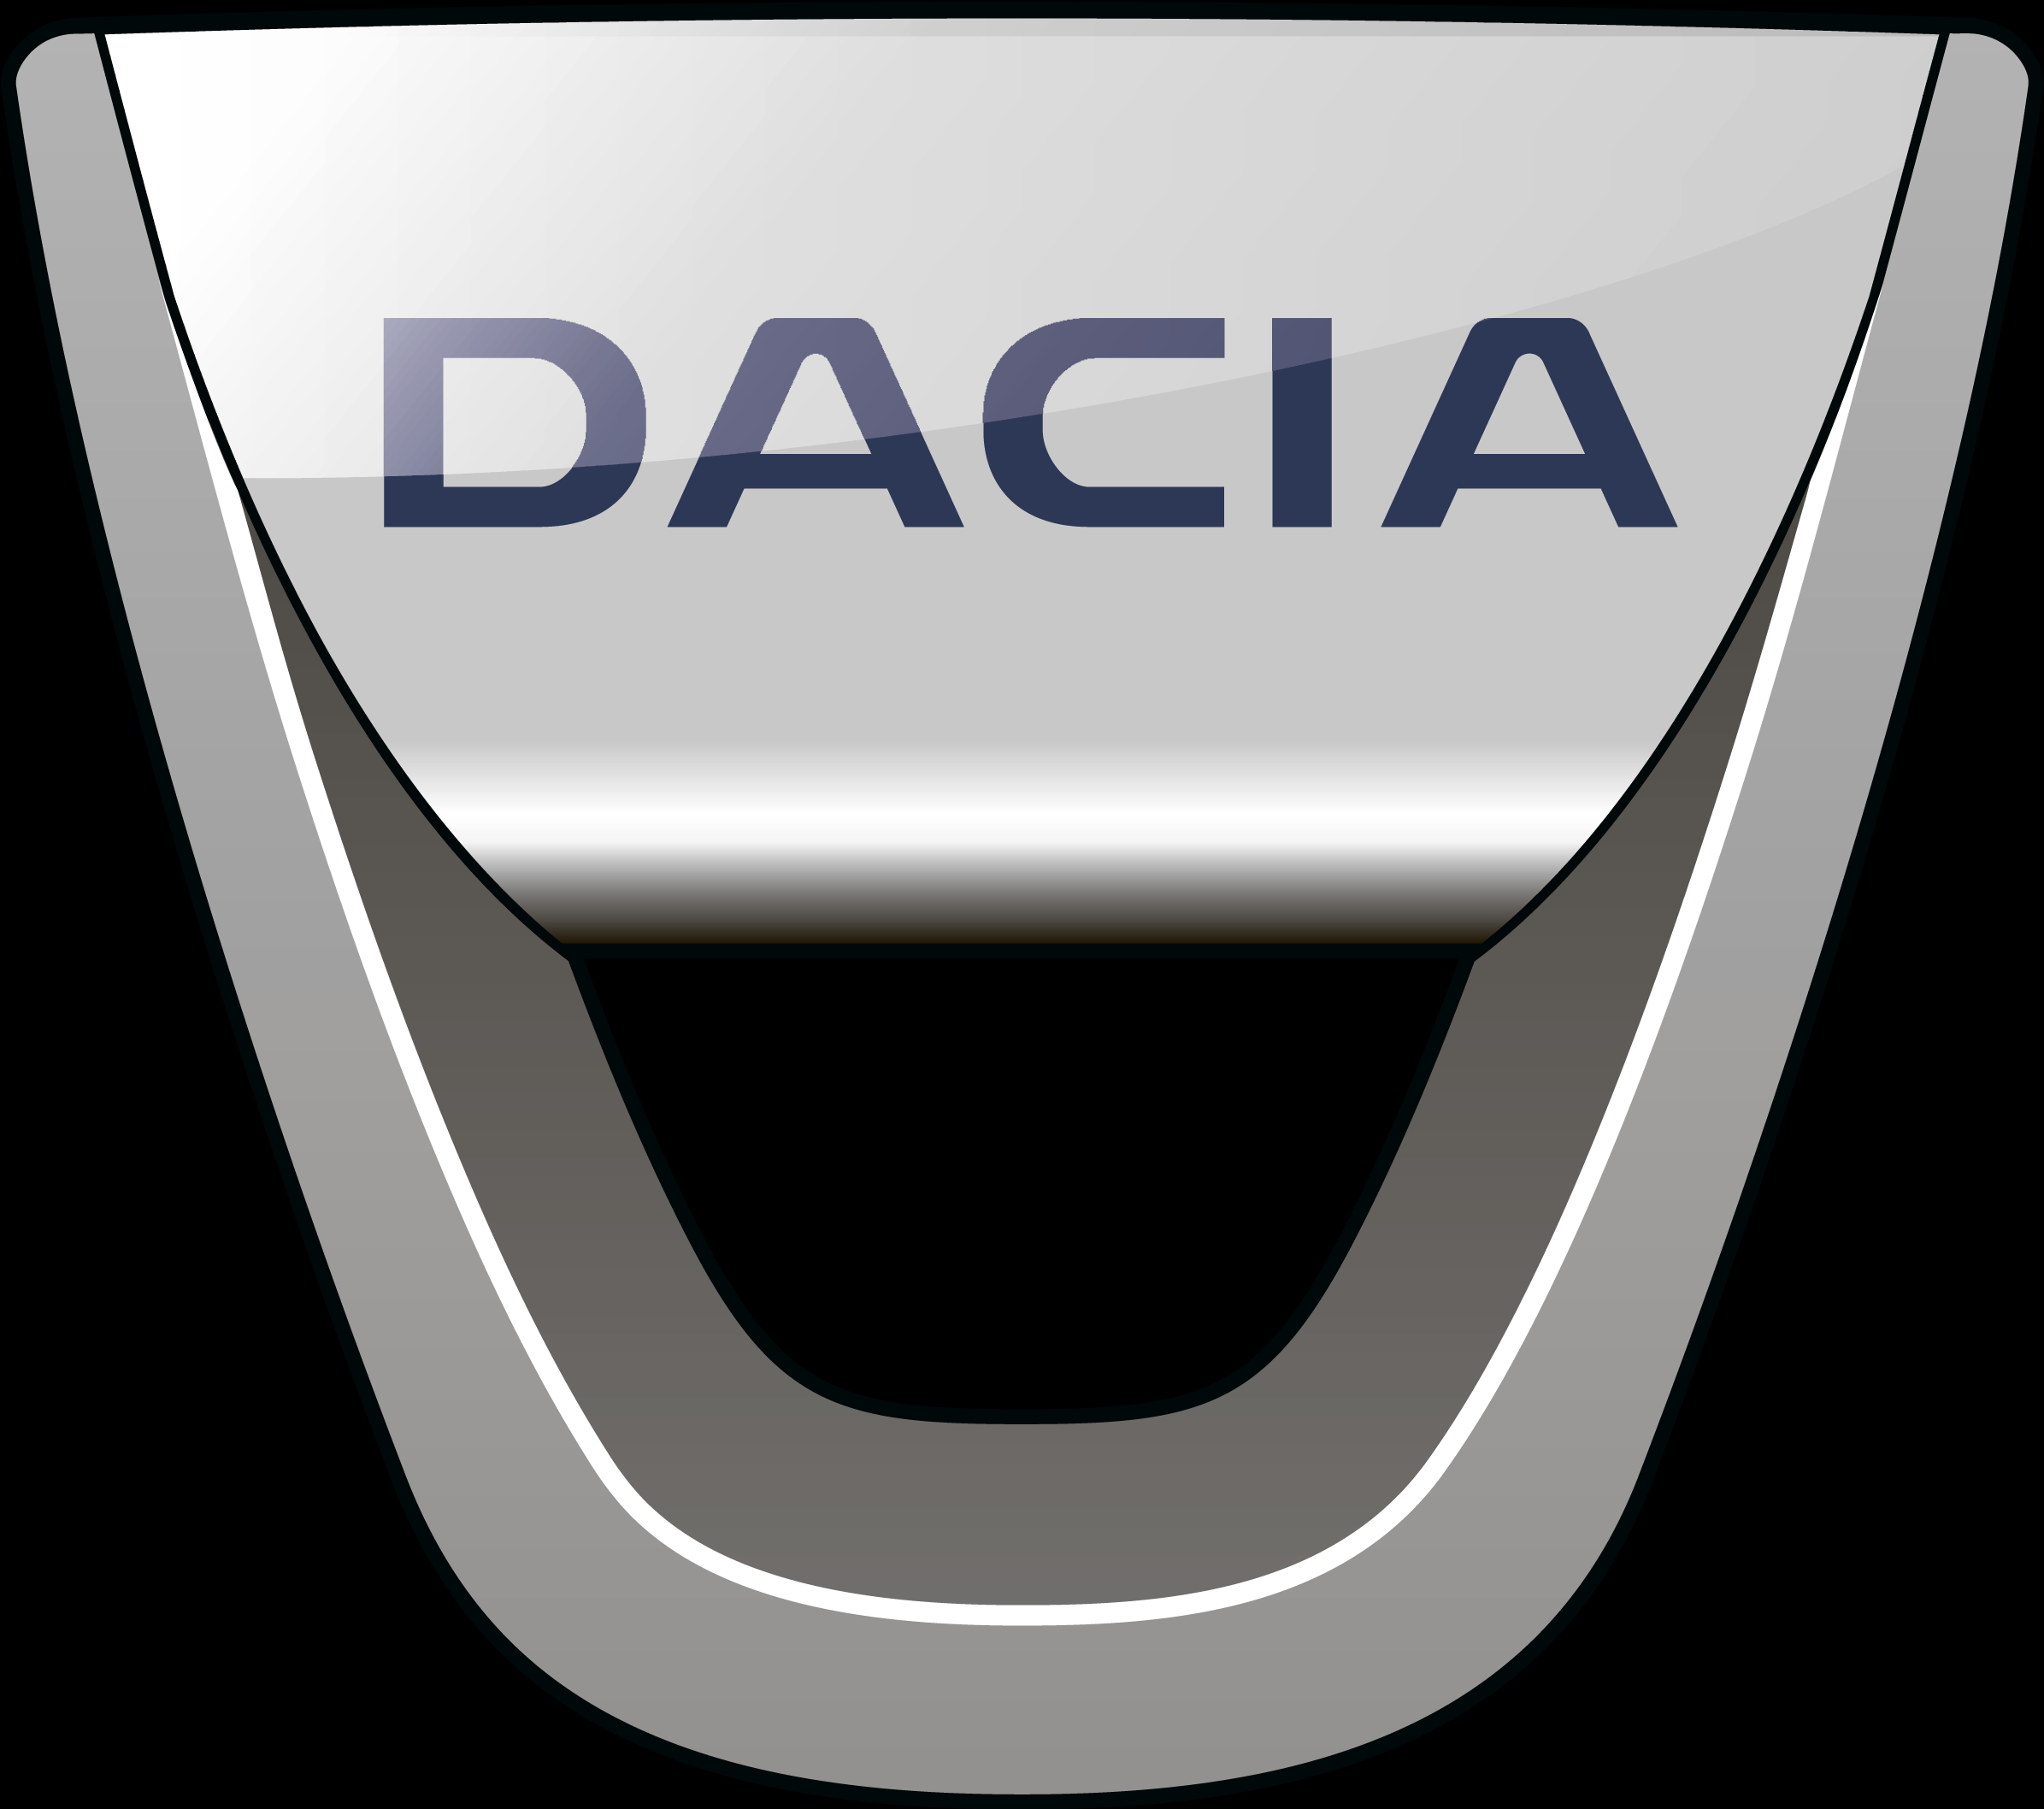 Logo Dacia Renault Image Collections Wallpaper And